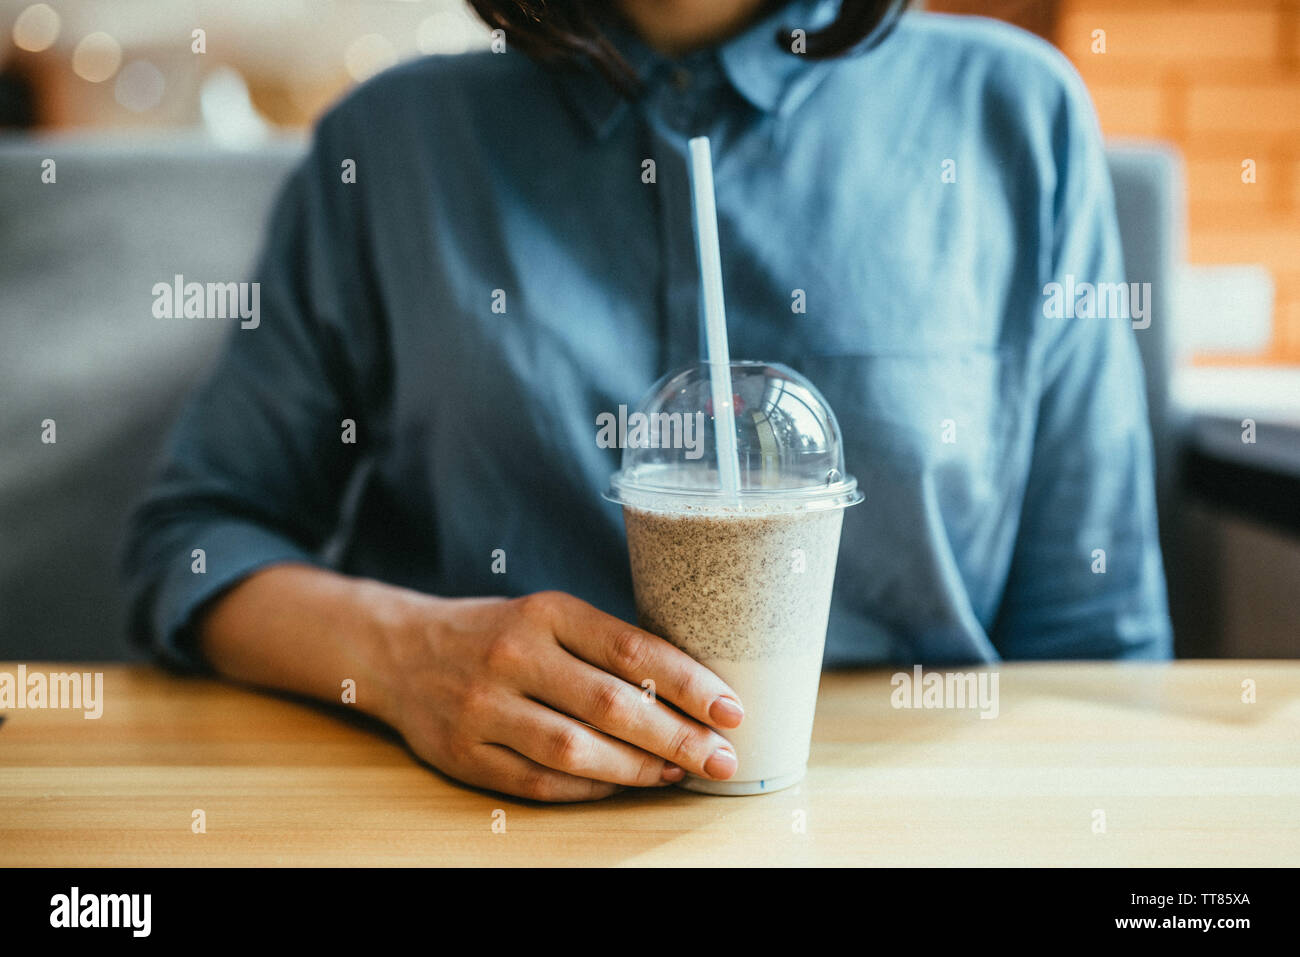 https://c8.alamy.com/comp/TT85XA/girl-in-a-blue-shirt-is-holding-a-plastic-cup-with-milkshake-sitting-in-a-restaurant-TT85XA.jpg